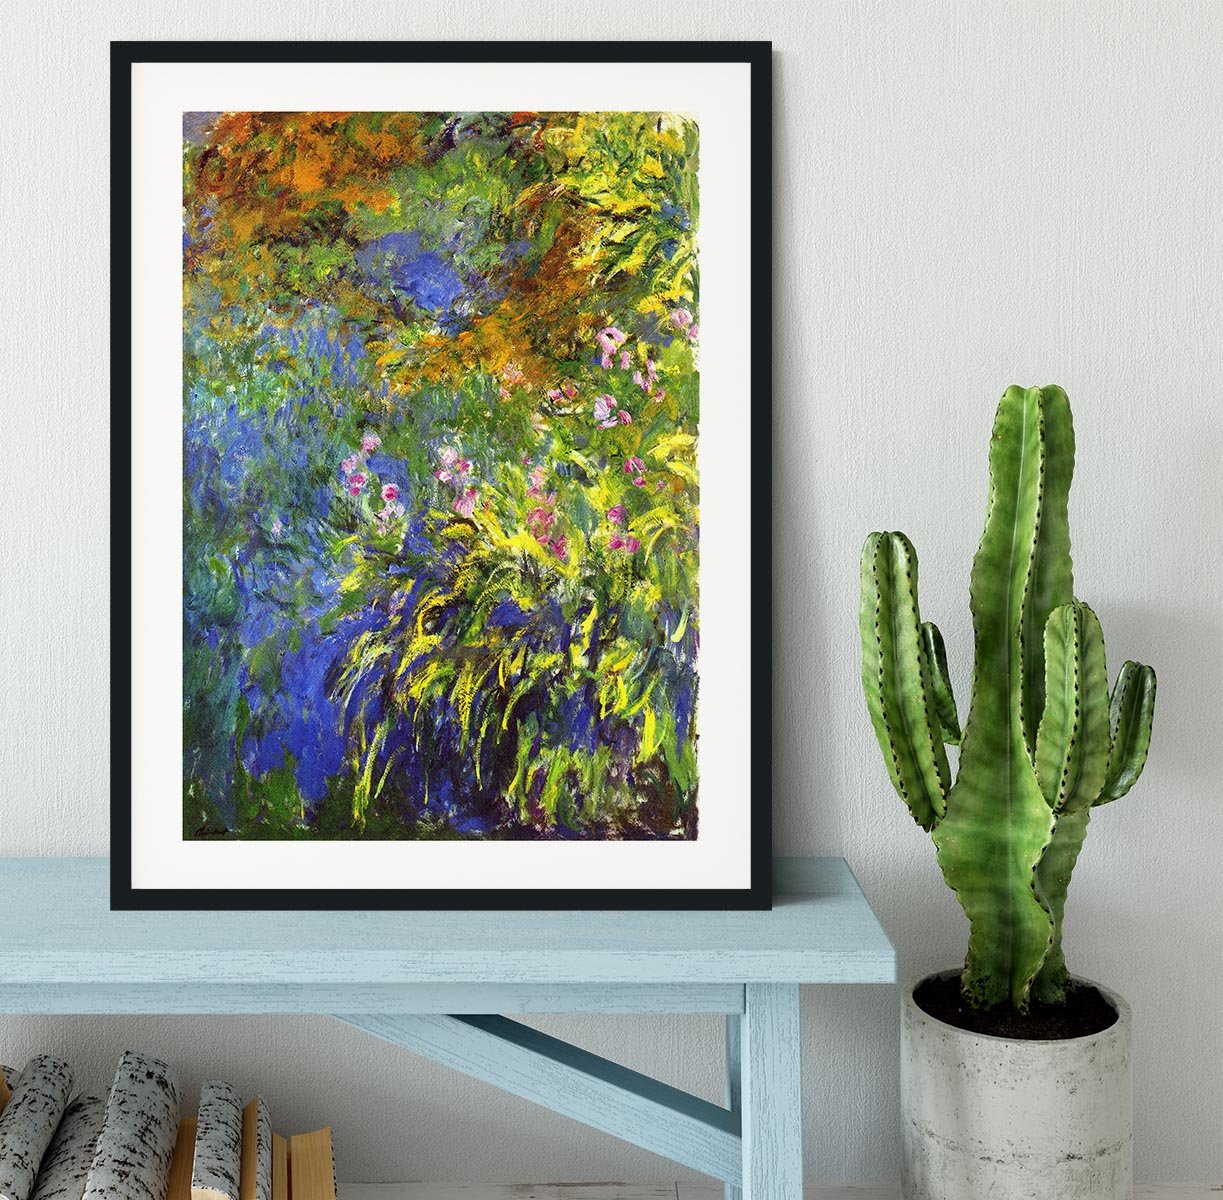 Iris at the sea rose pond 2 by Monet Framed Print - Canvas Art Rocks - 1